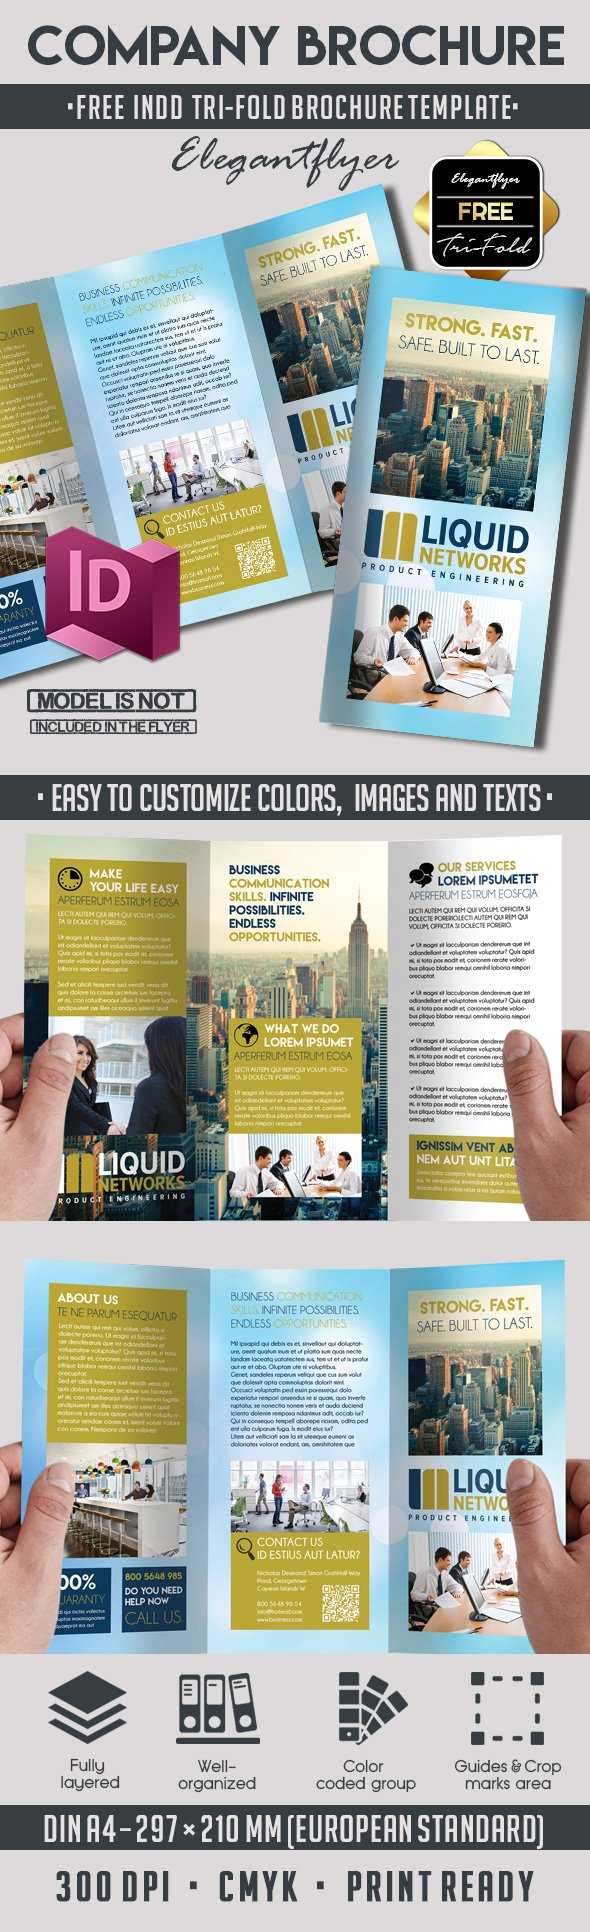 5 Powerful Free Adobe Indesign Brochures Templates! | Inside Adobe Indesign Tri Fold Brochure Template